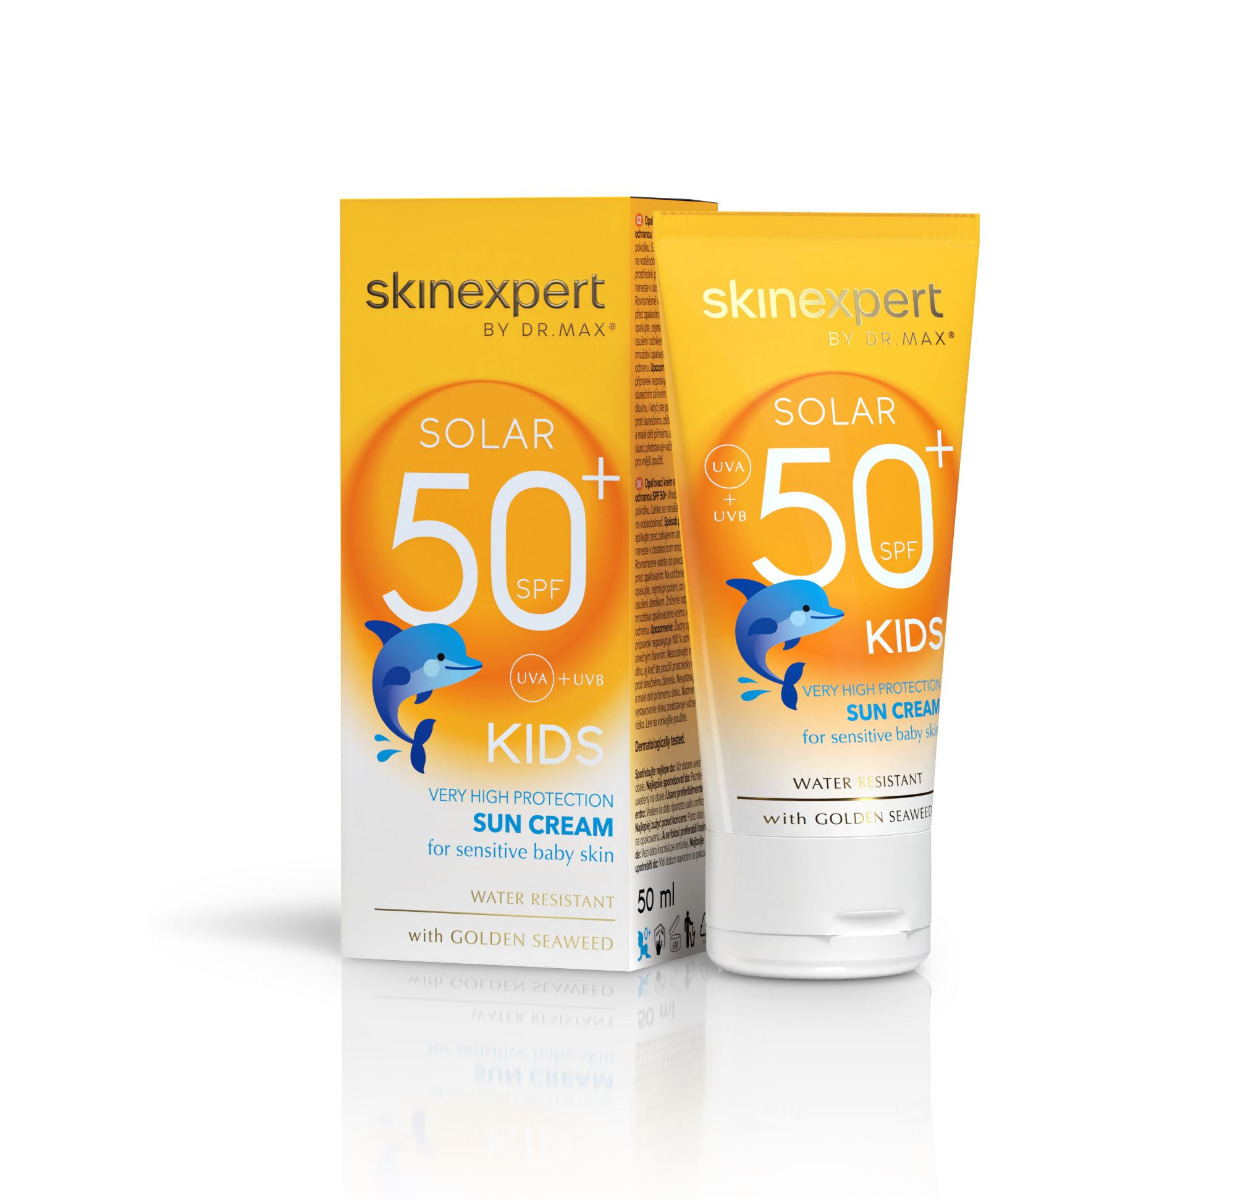 skinexpert BY DR.MAX SOLAR Sun Cream Kids SPF50+ 50 ml skinexpert BY DR.MAX SOLAR